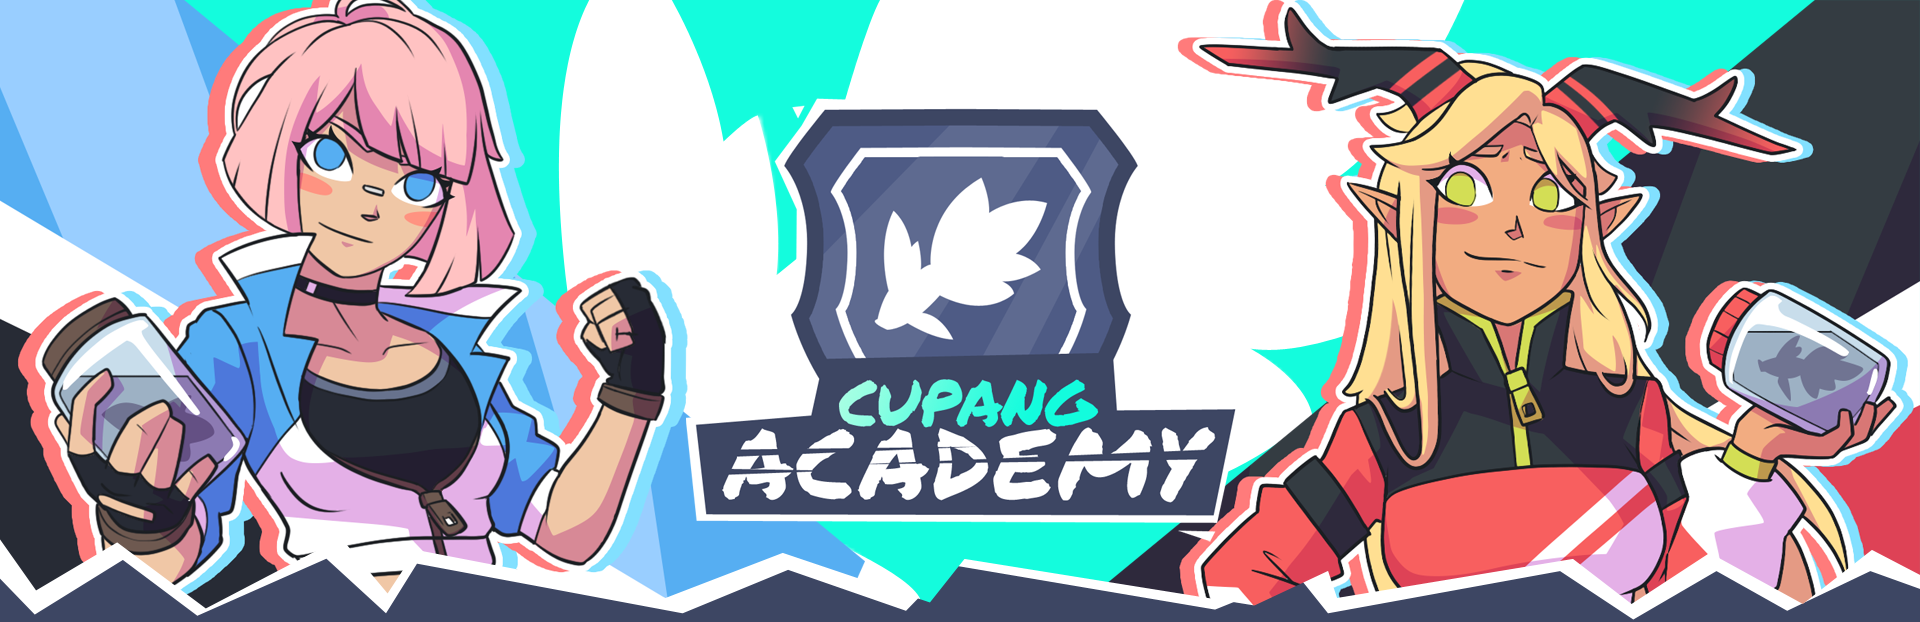 Cupang Academy